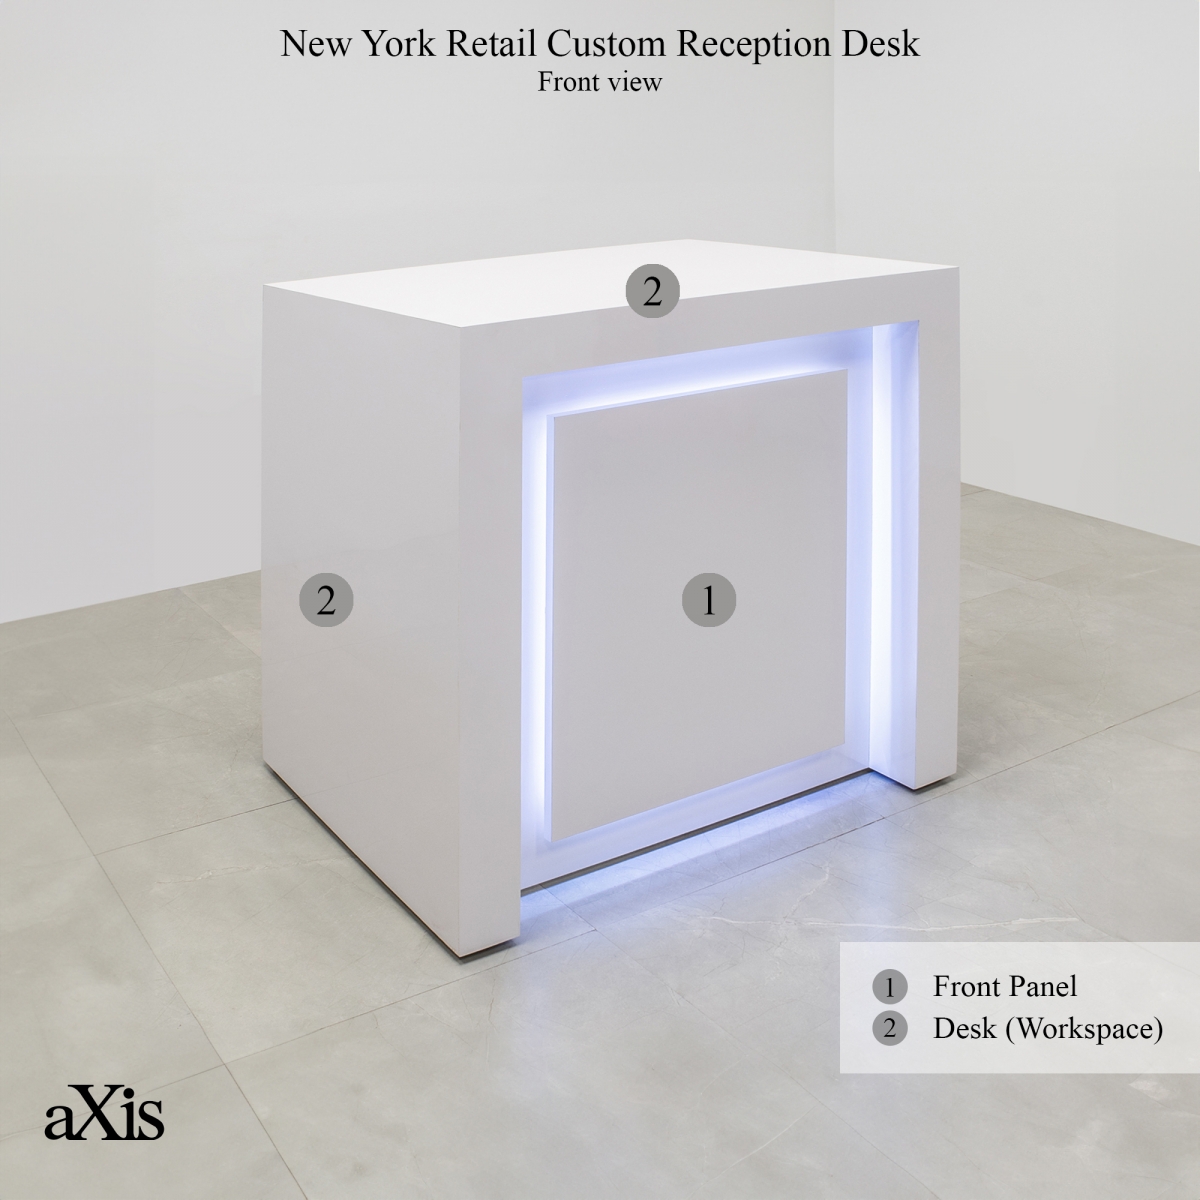 New York Retail Custom Reception Desk